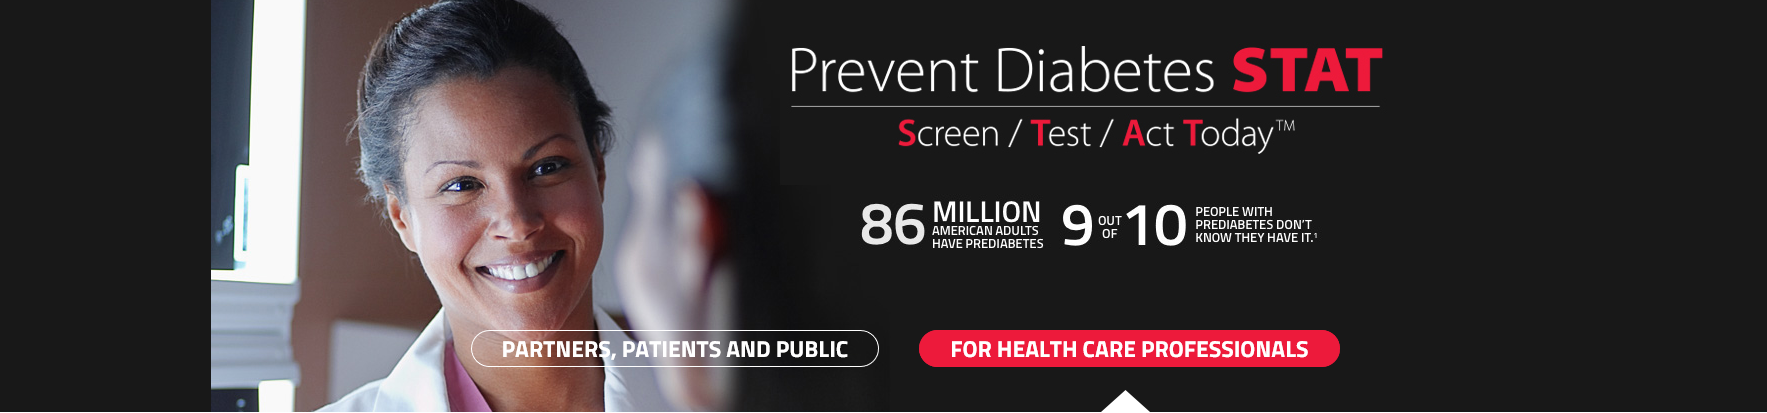 Prevent Diabetes Stat for Partners, Patients, and the Public